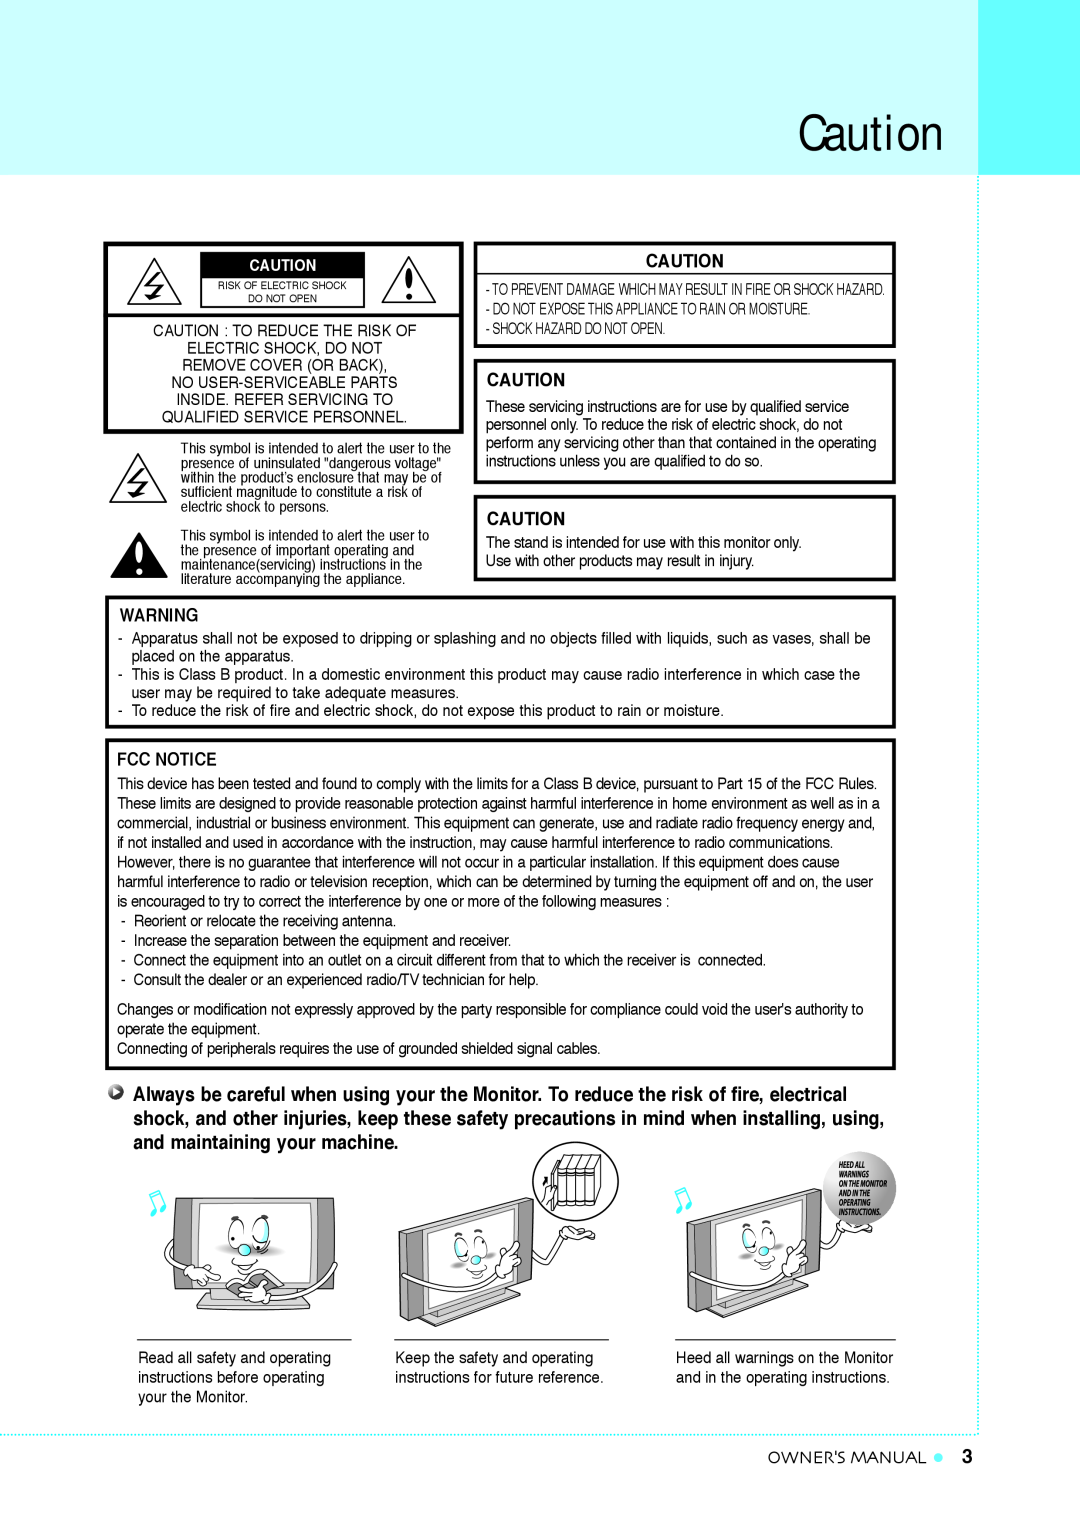 InFocus TD32, TD40 NTSC manual Fcc Notice, Owners Manual 